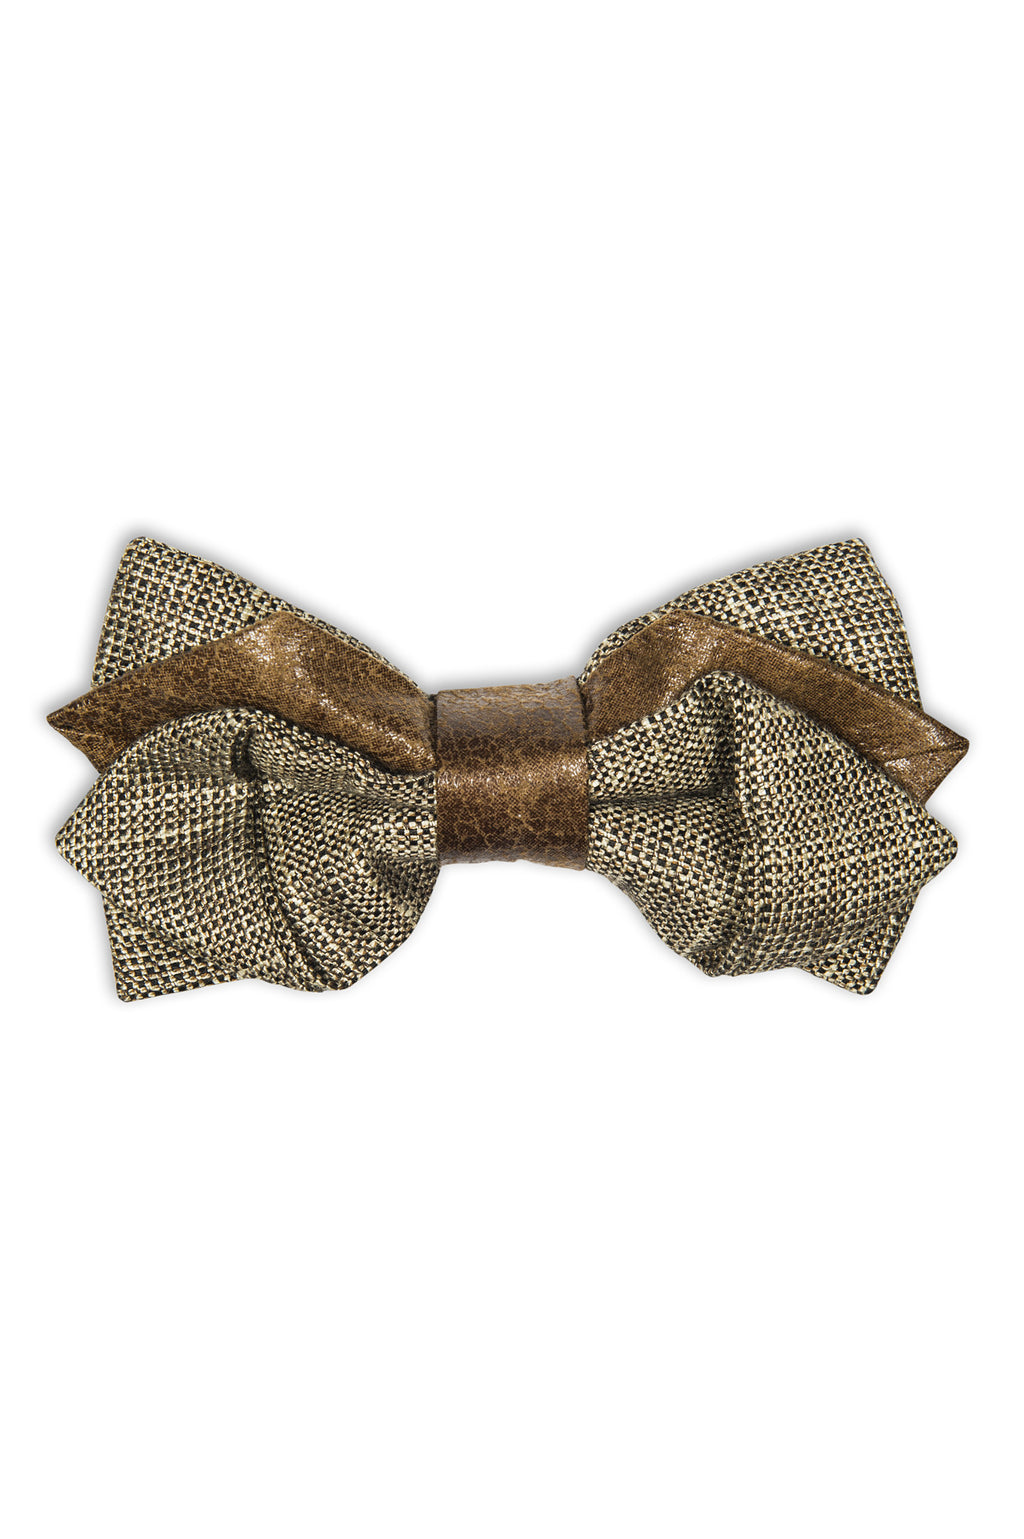 Handmade wool bow tie in a original cut - Noeud papillon avec coupe originale 